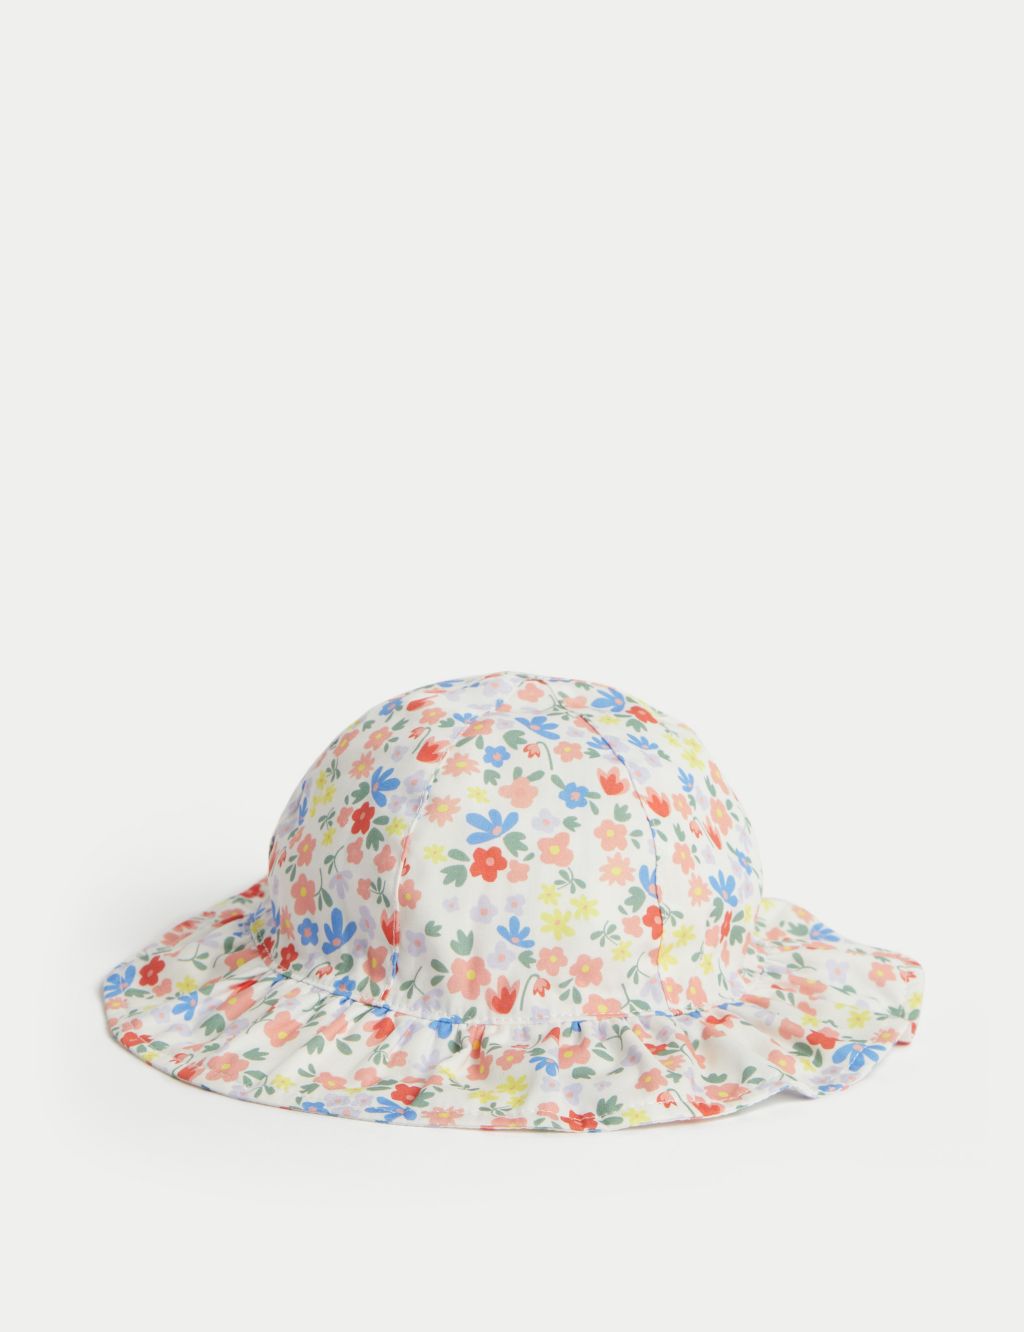 Kids' Pure Cotton Reversible Floral Sun Hat (12 Mths-6 Yrs) image 1